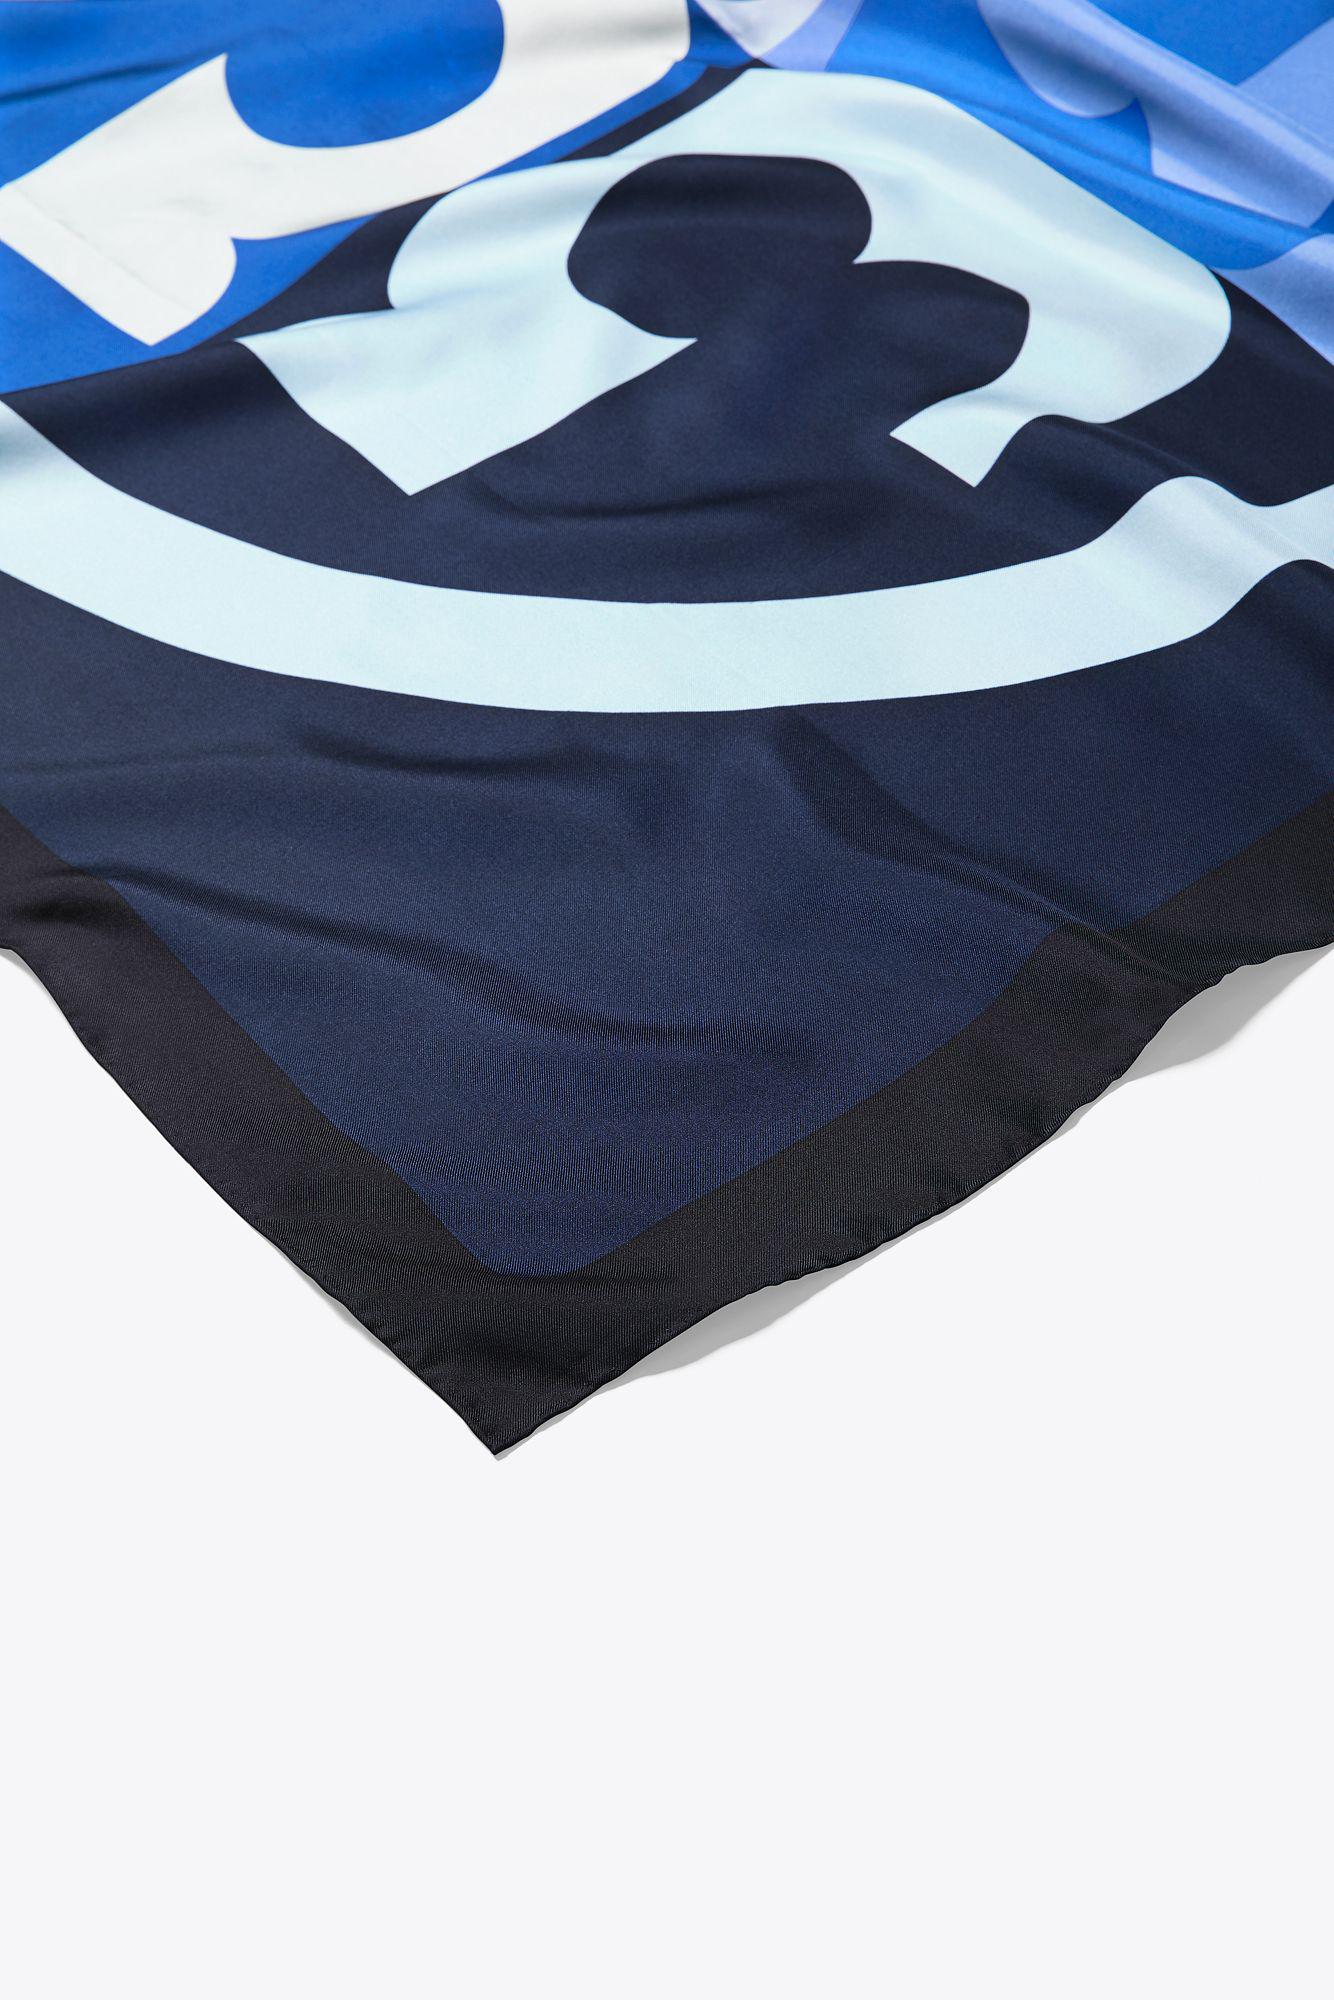 Tory Burch Color-block Logo Silk Square Scarf in Blue | Lyst